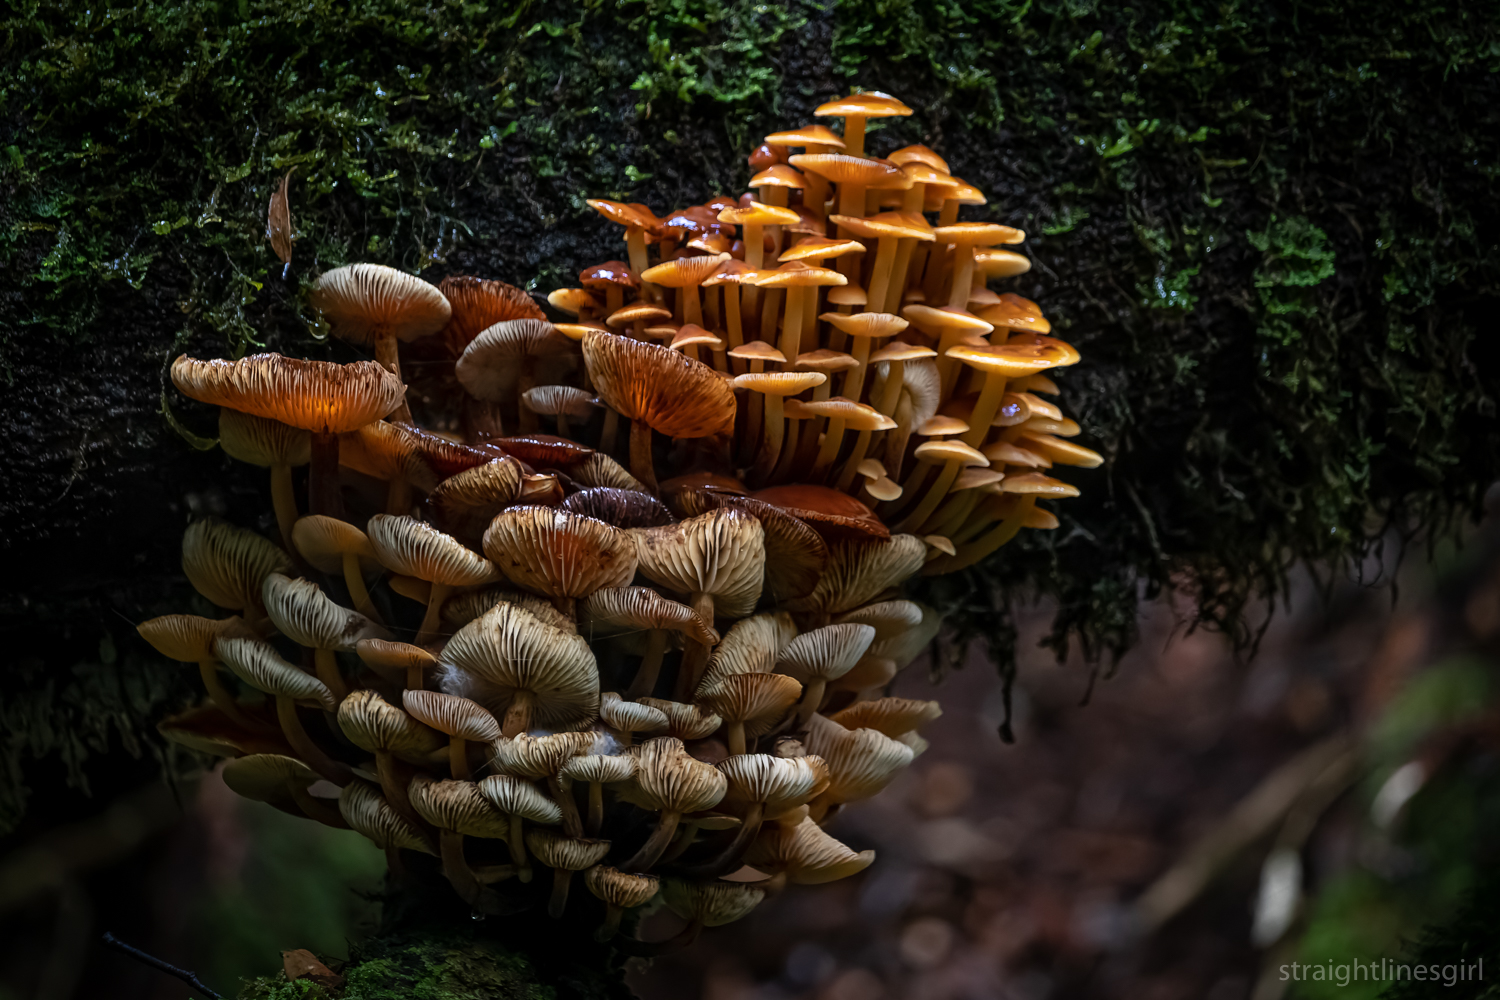 A cluster of orange funghi